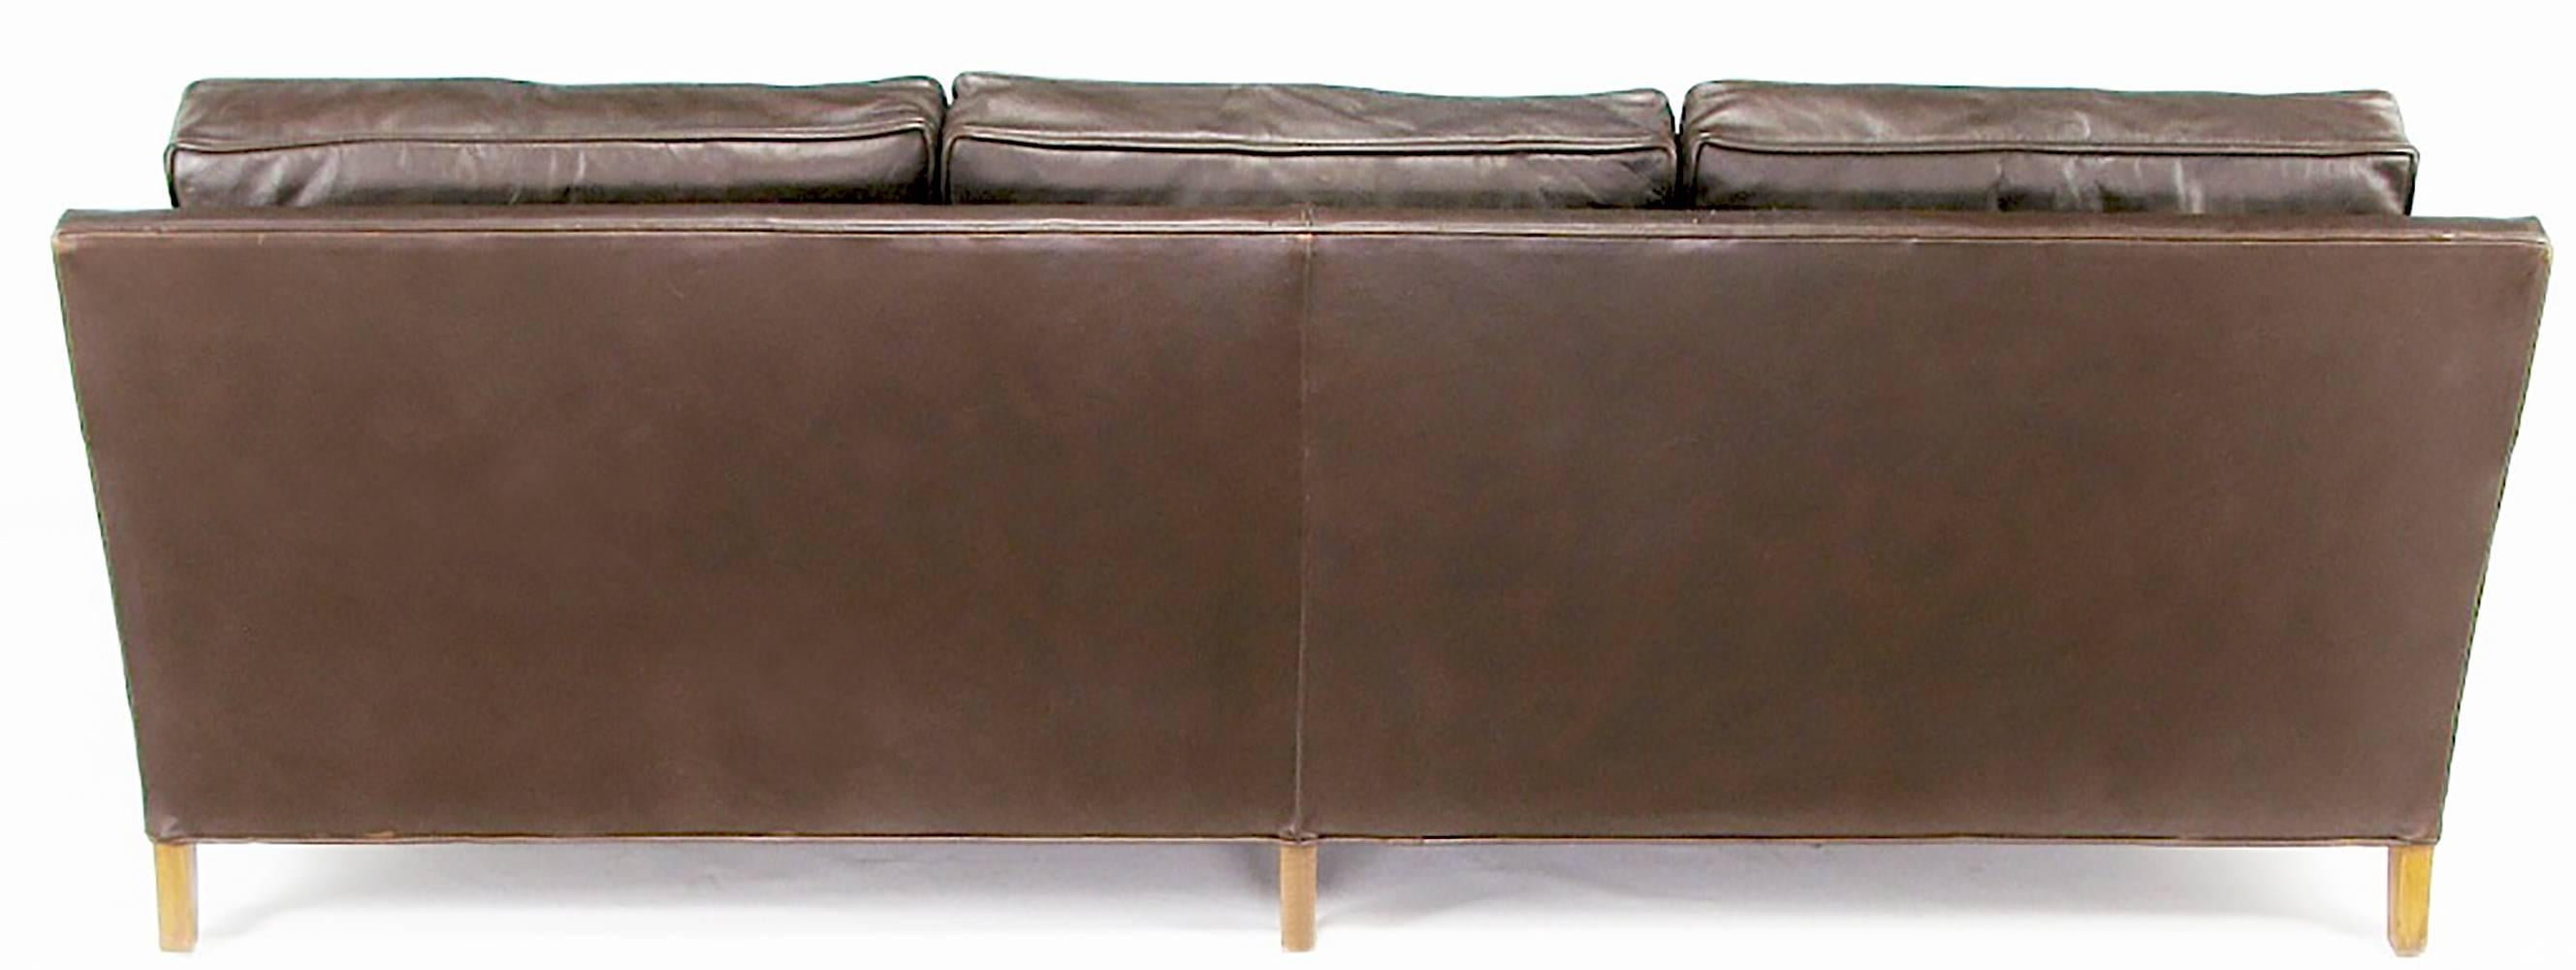 chocolate leather furniture